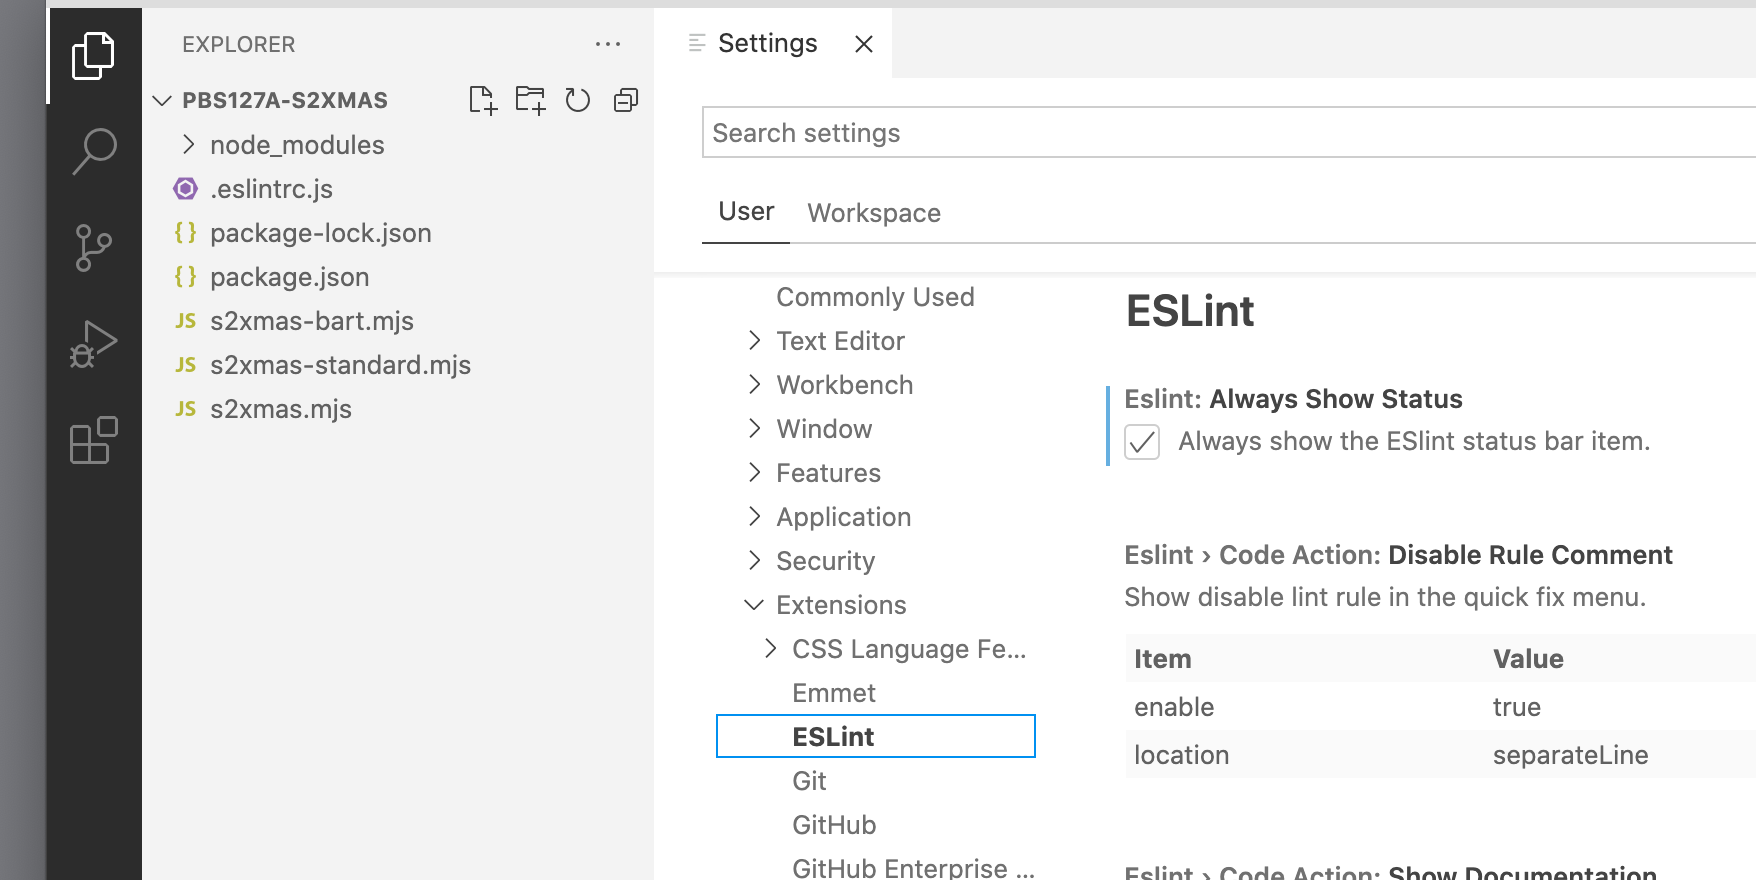 A screenshot showing the ESLint settings